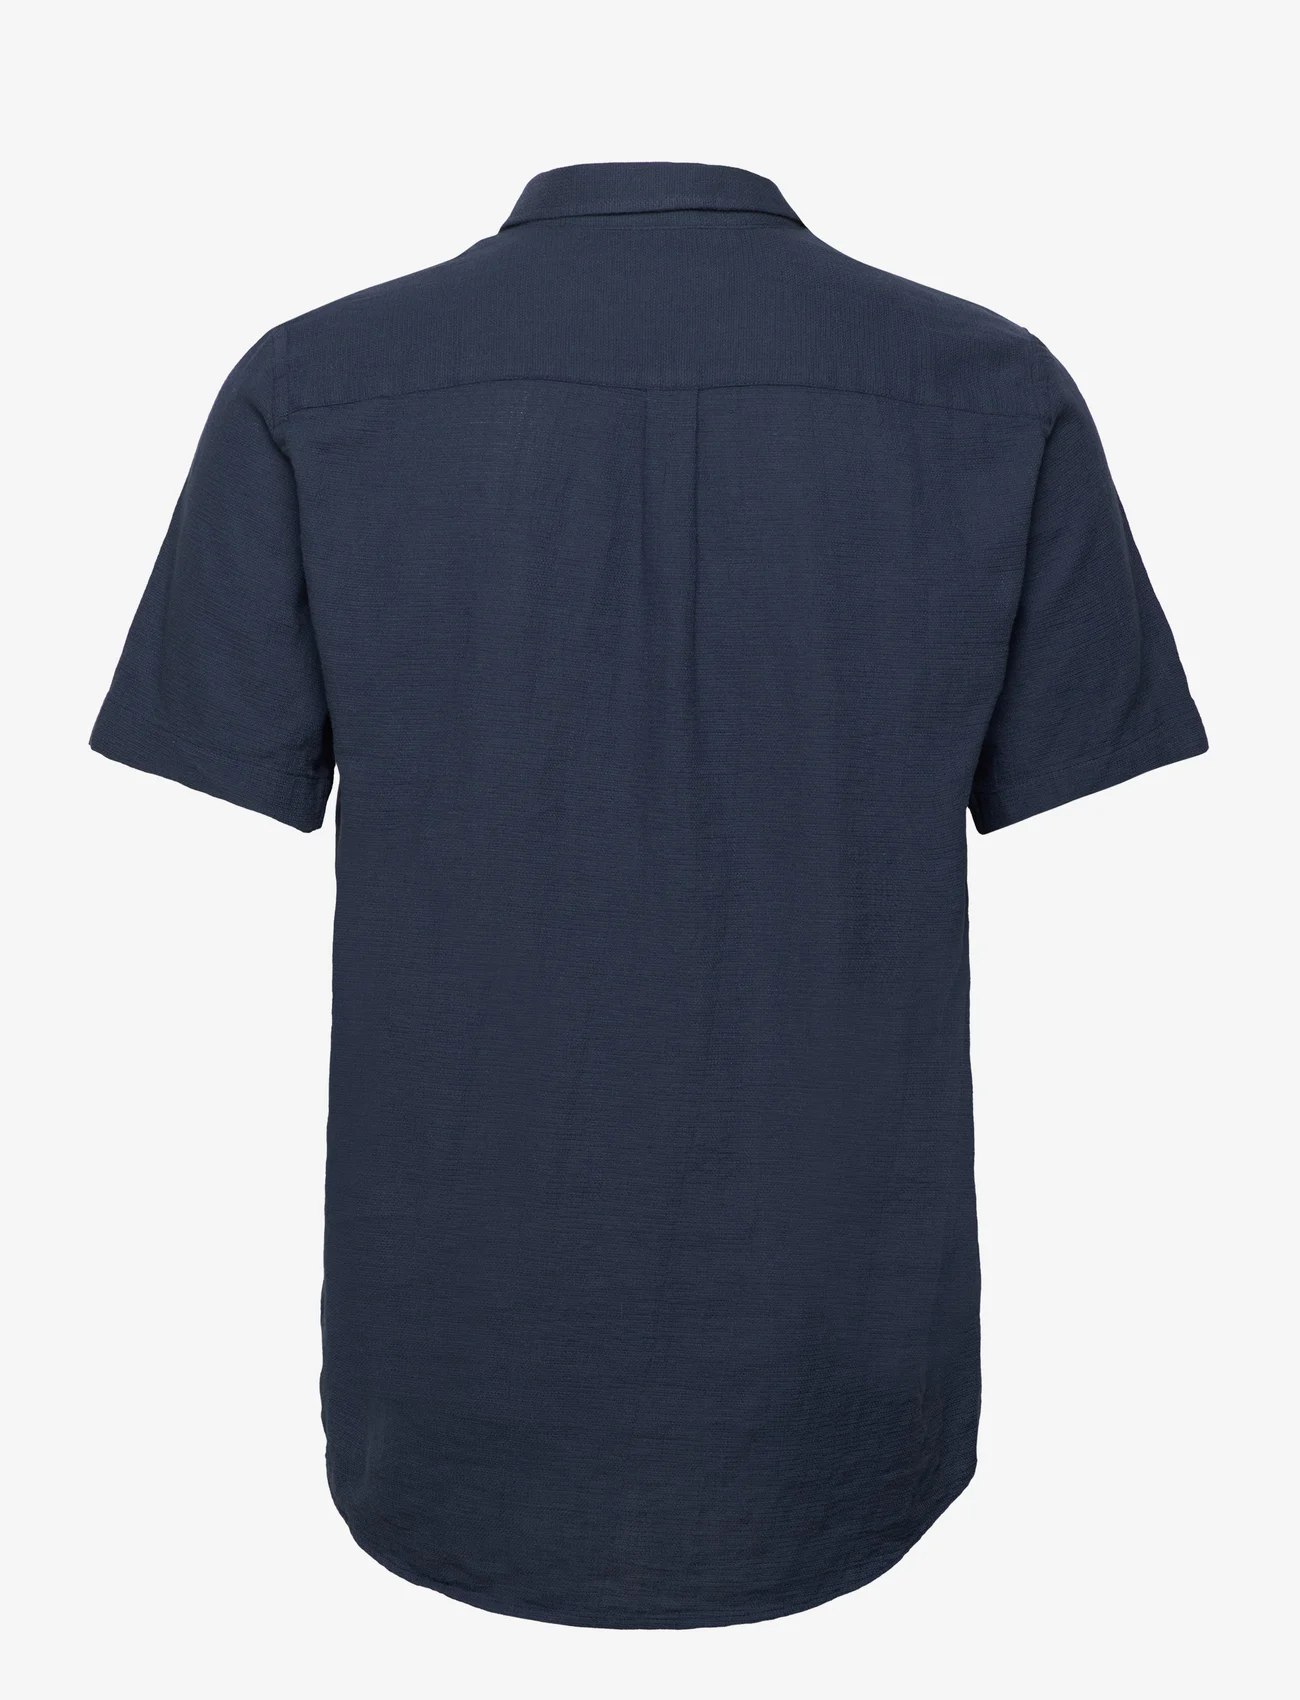 Revolution - Short-sleeved Cuban Shirt - lyhythihaiset - navy - 1